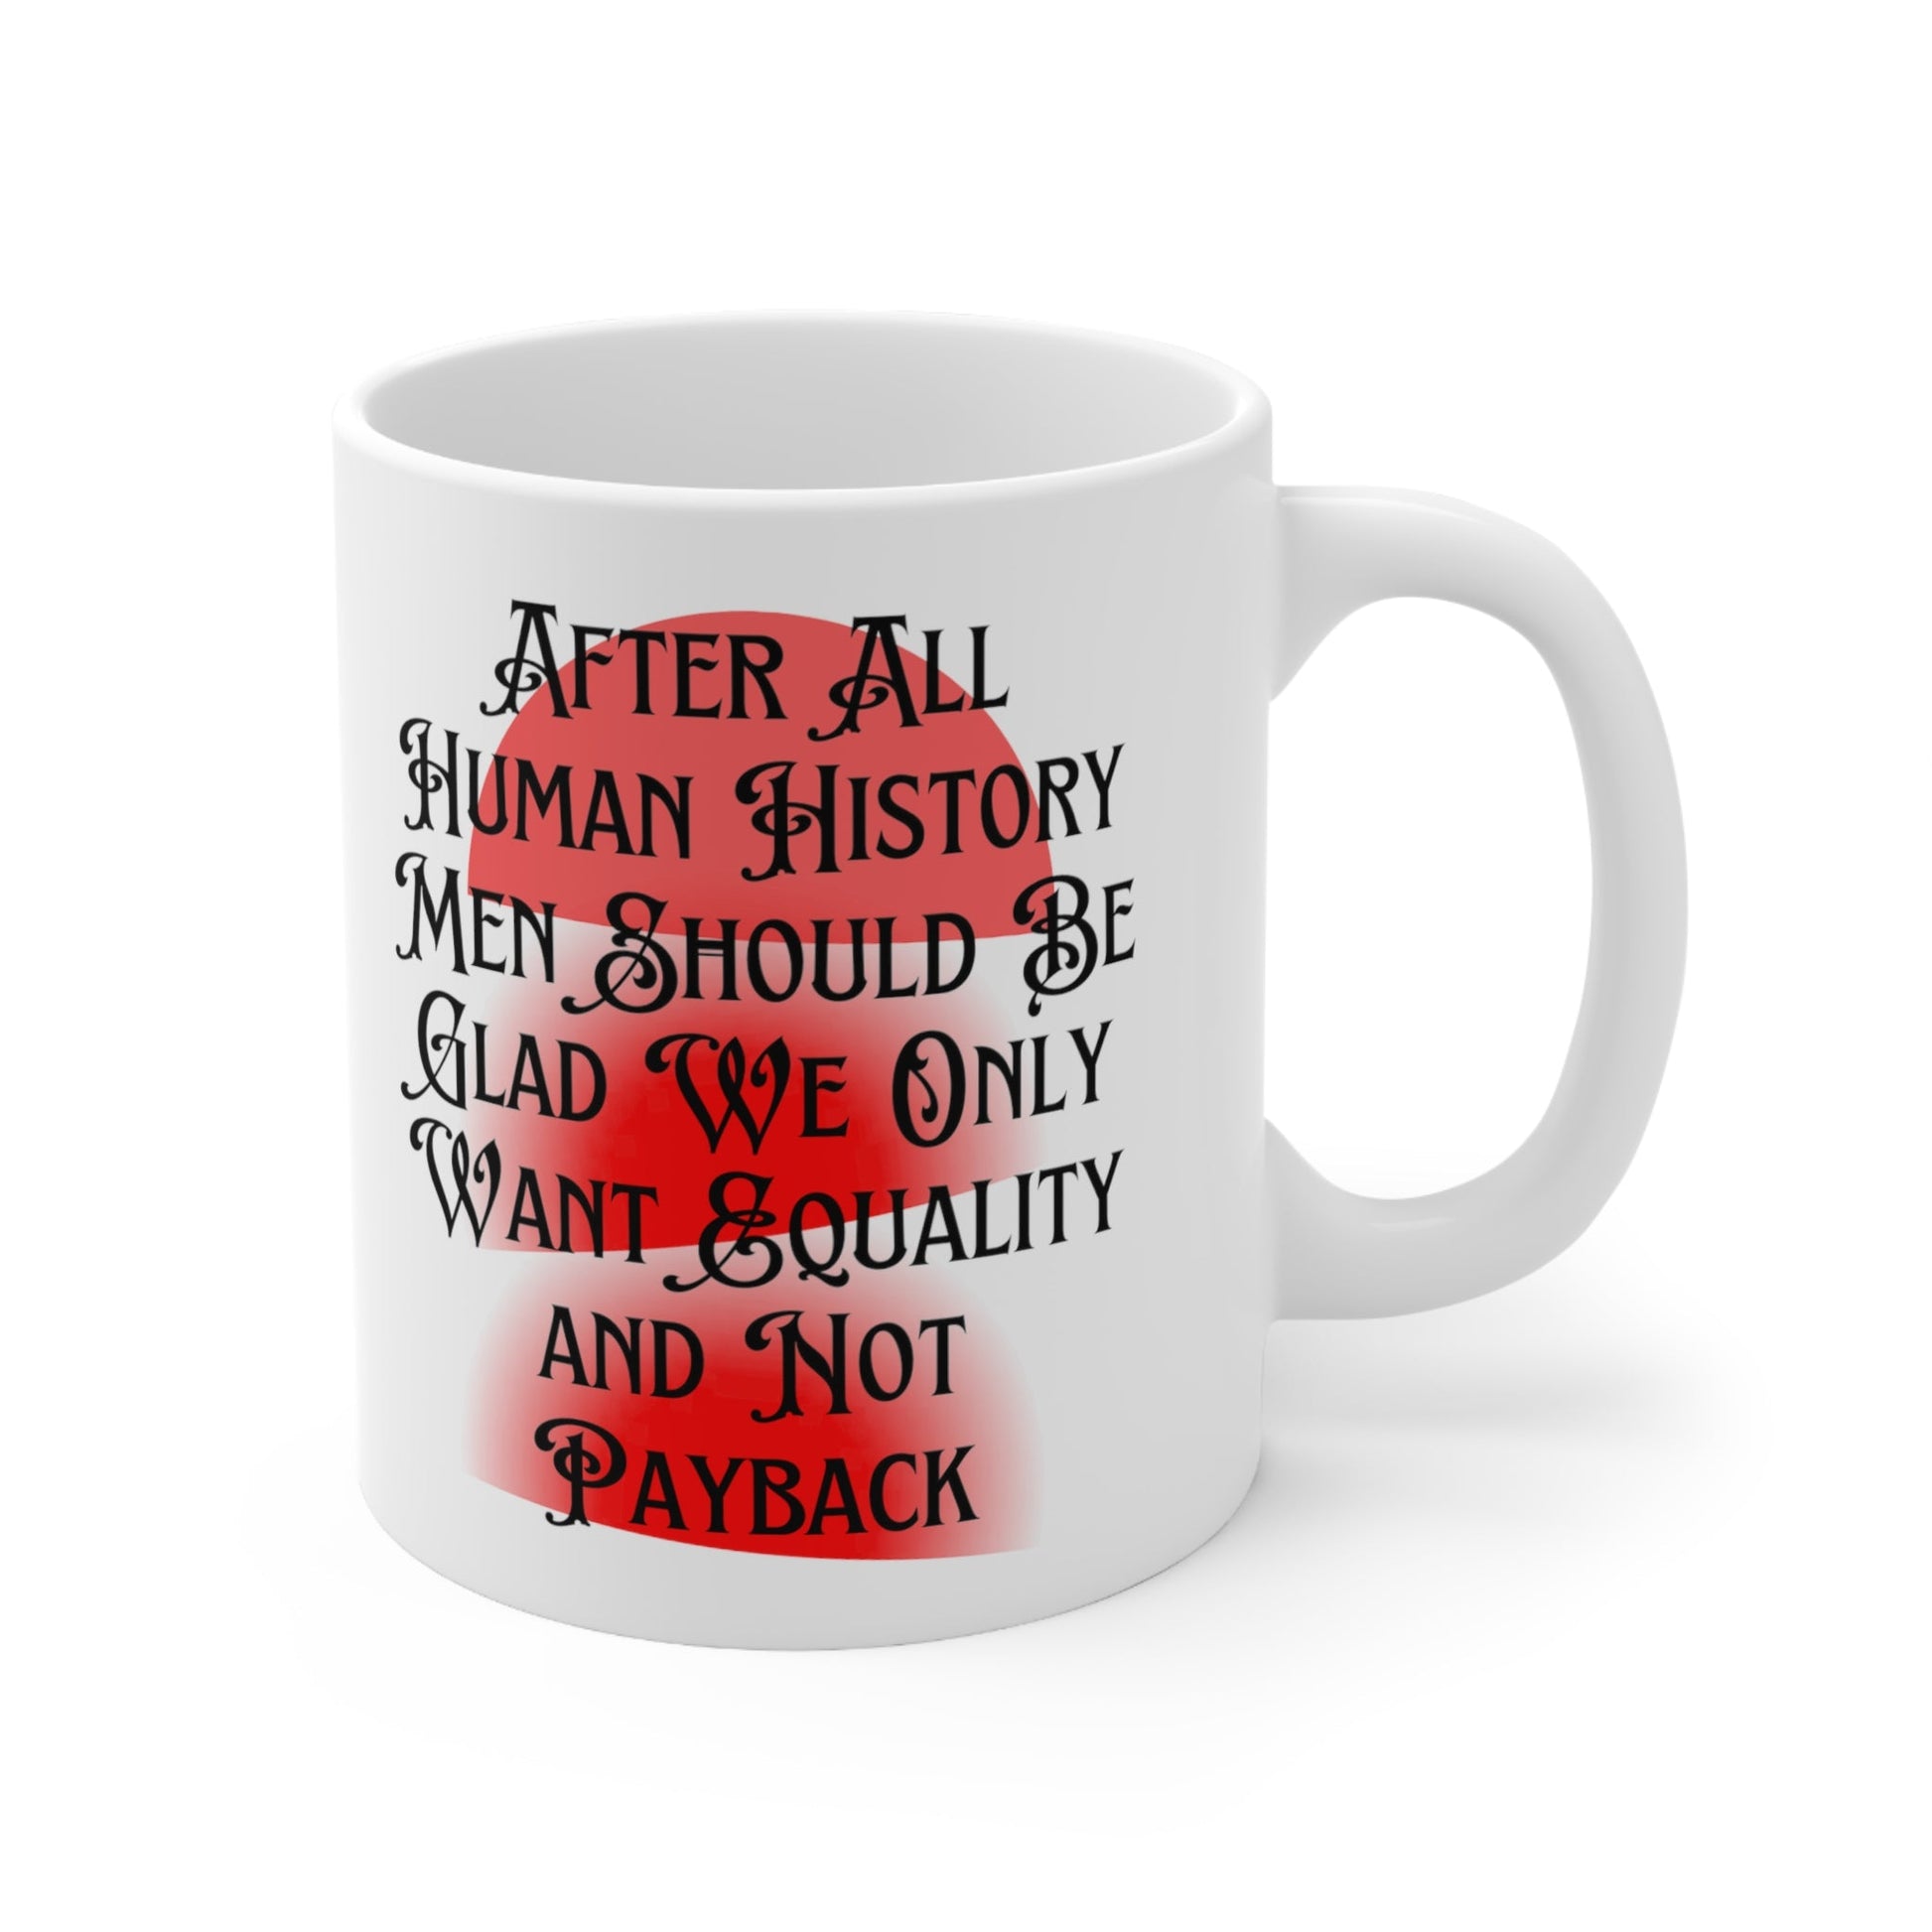 Men Should Be Glad We Want Equality and Not Payback Feminist Ceramic Mug 11oz